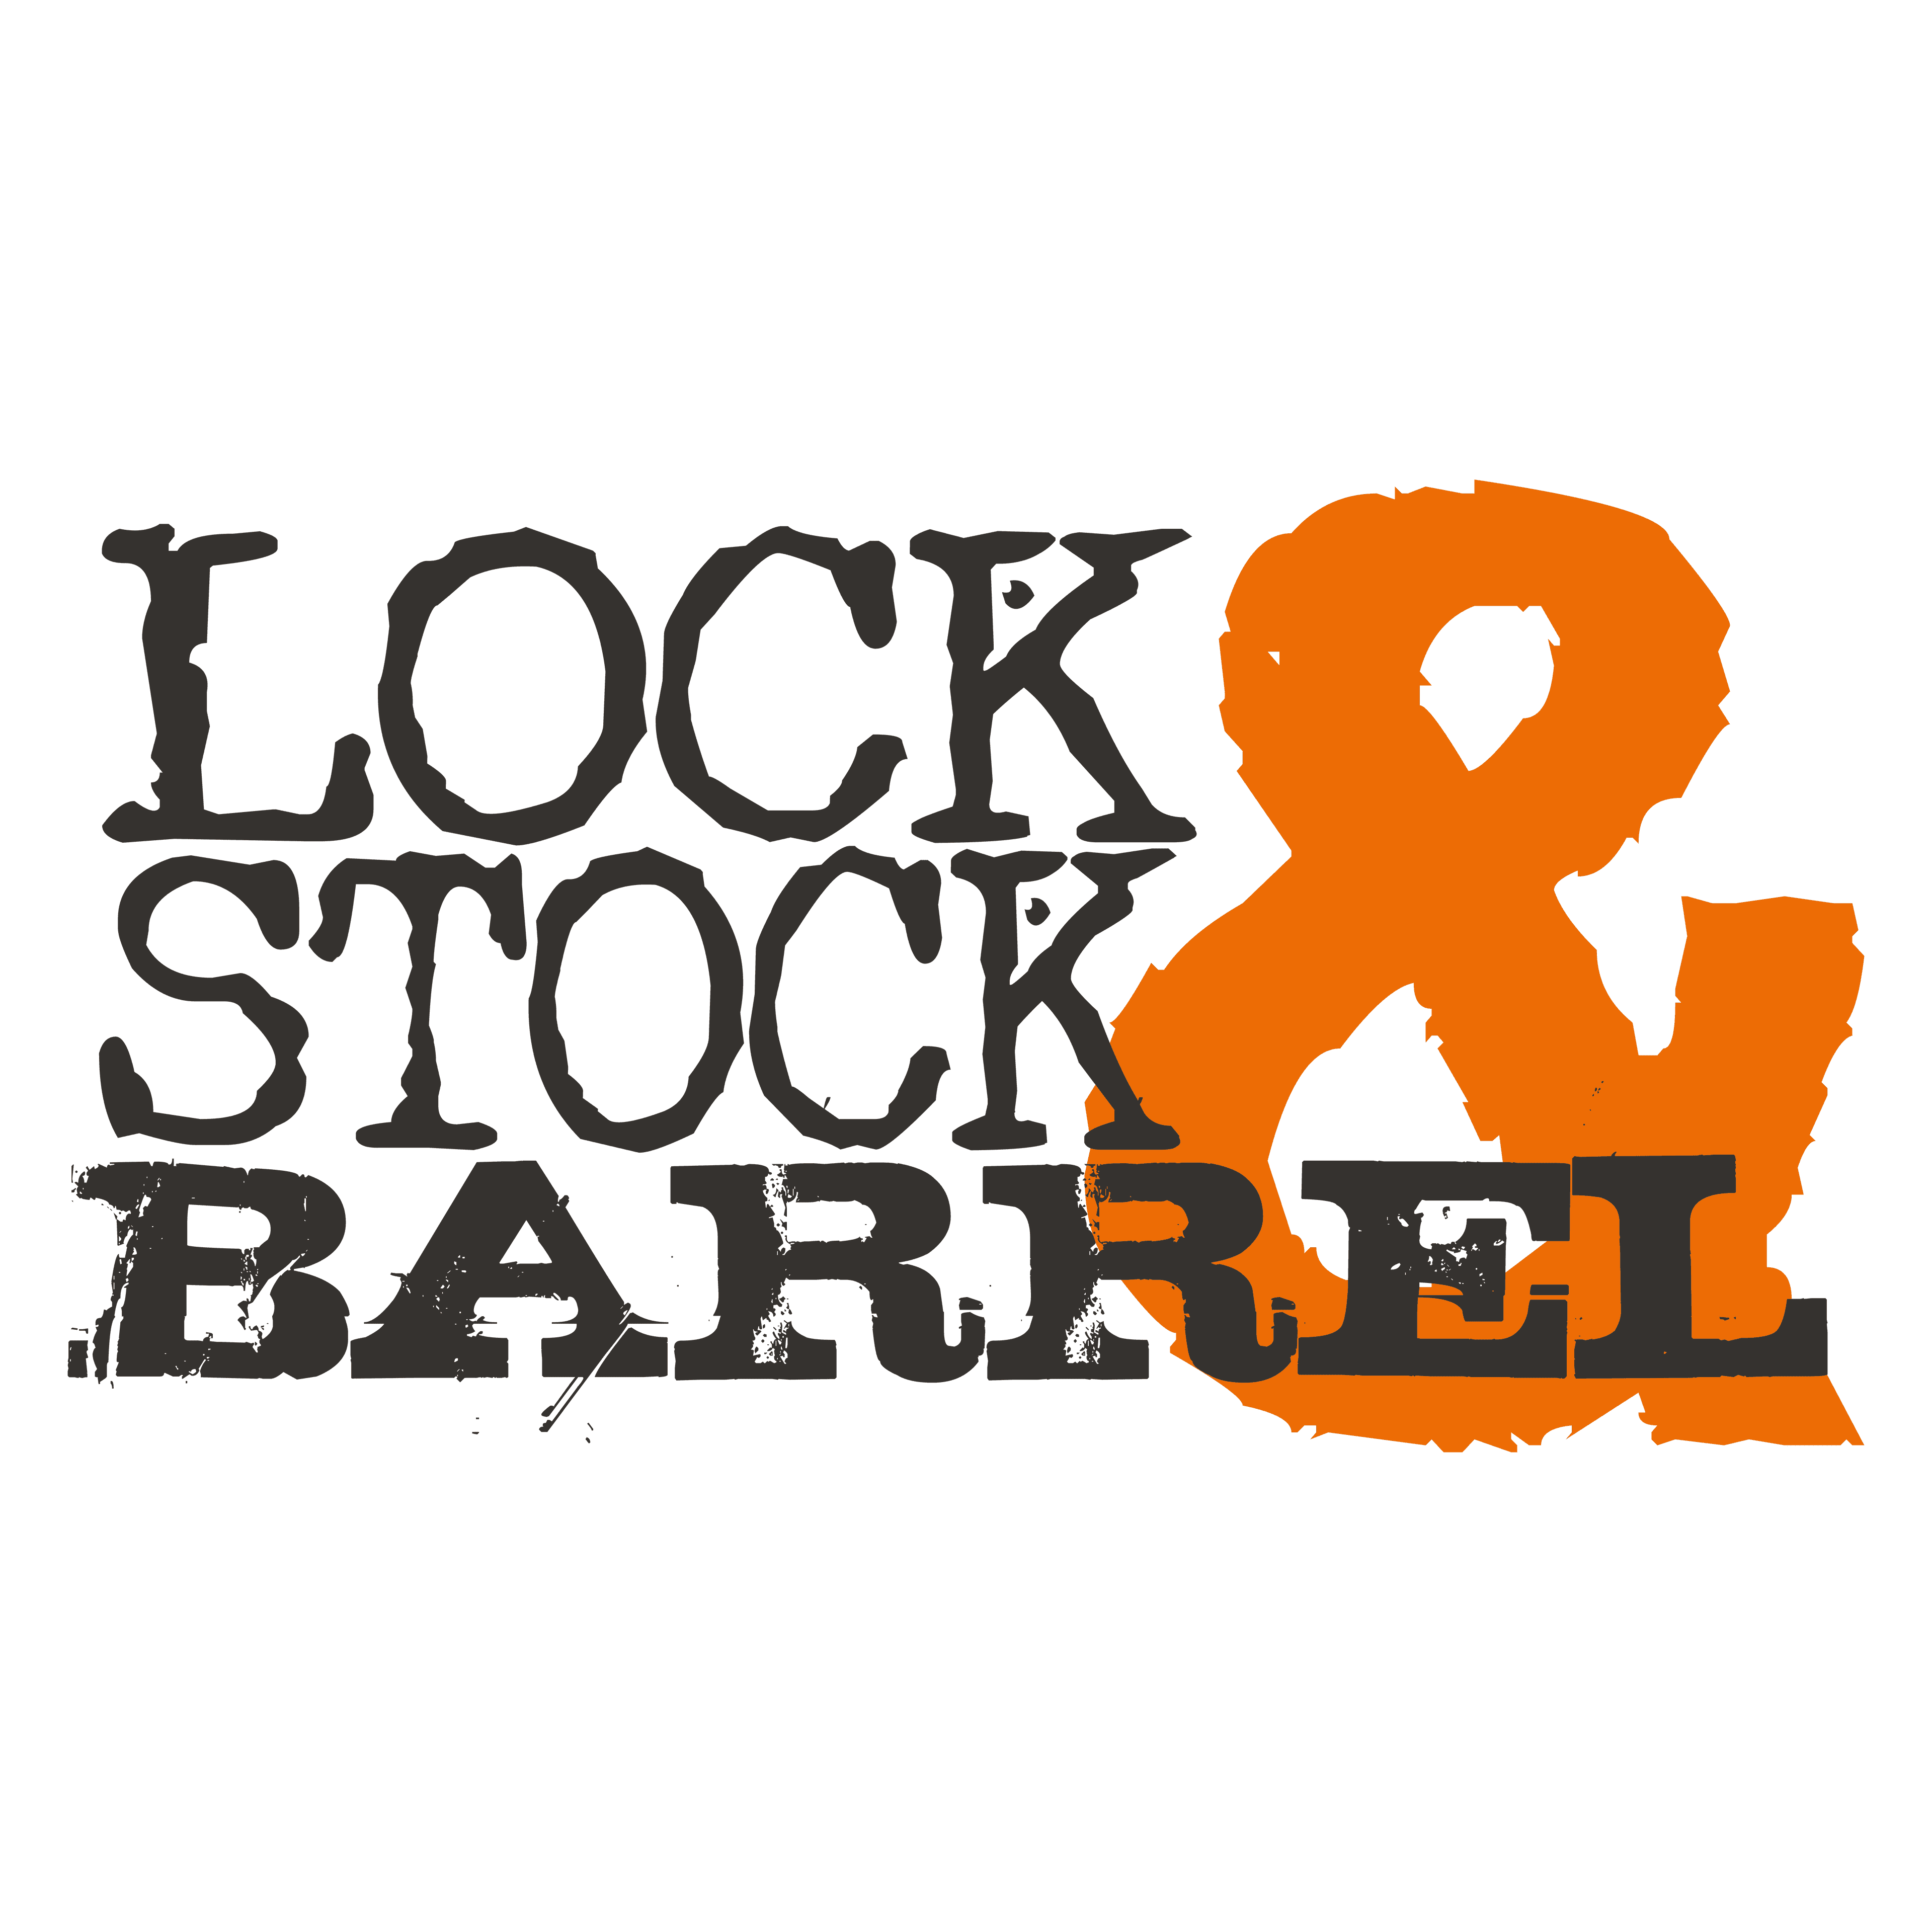 Lock, Stock & Halloween